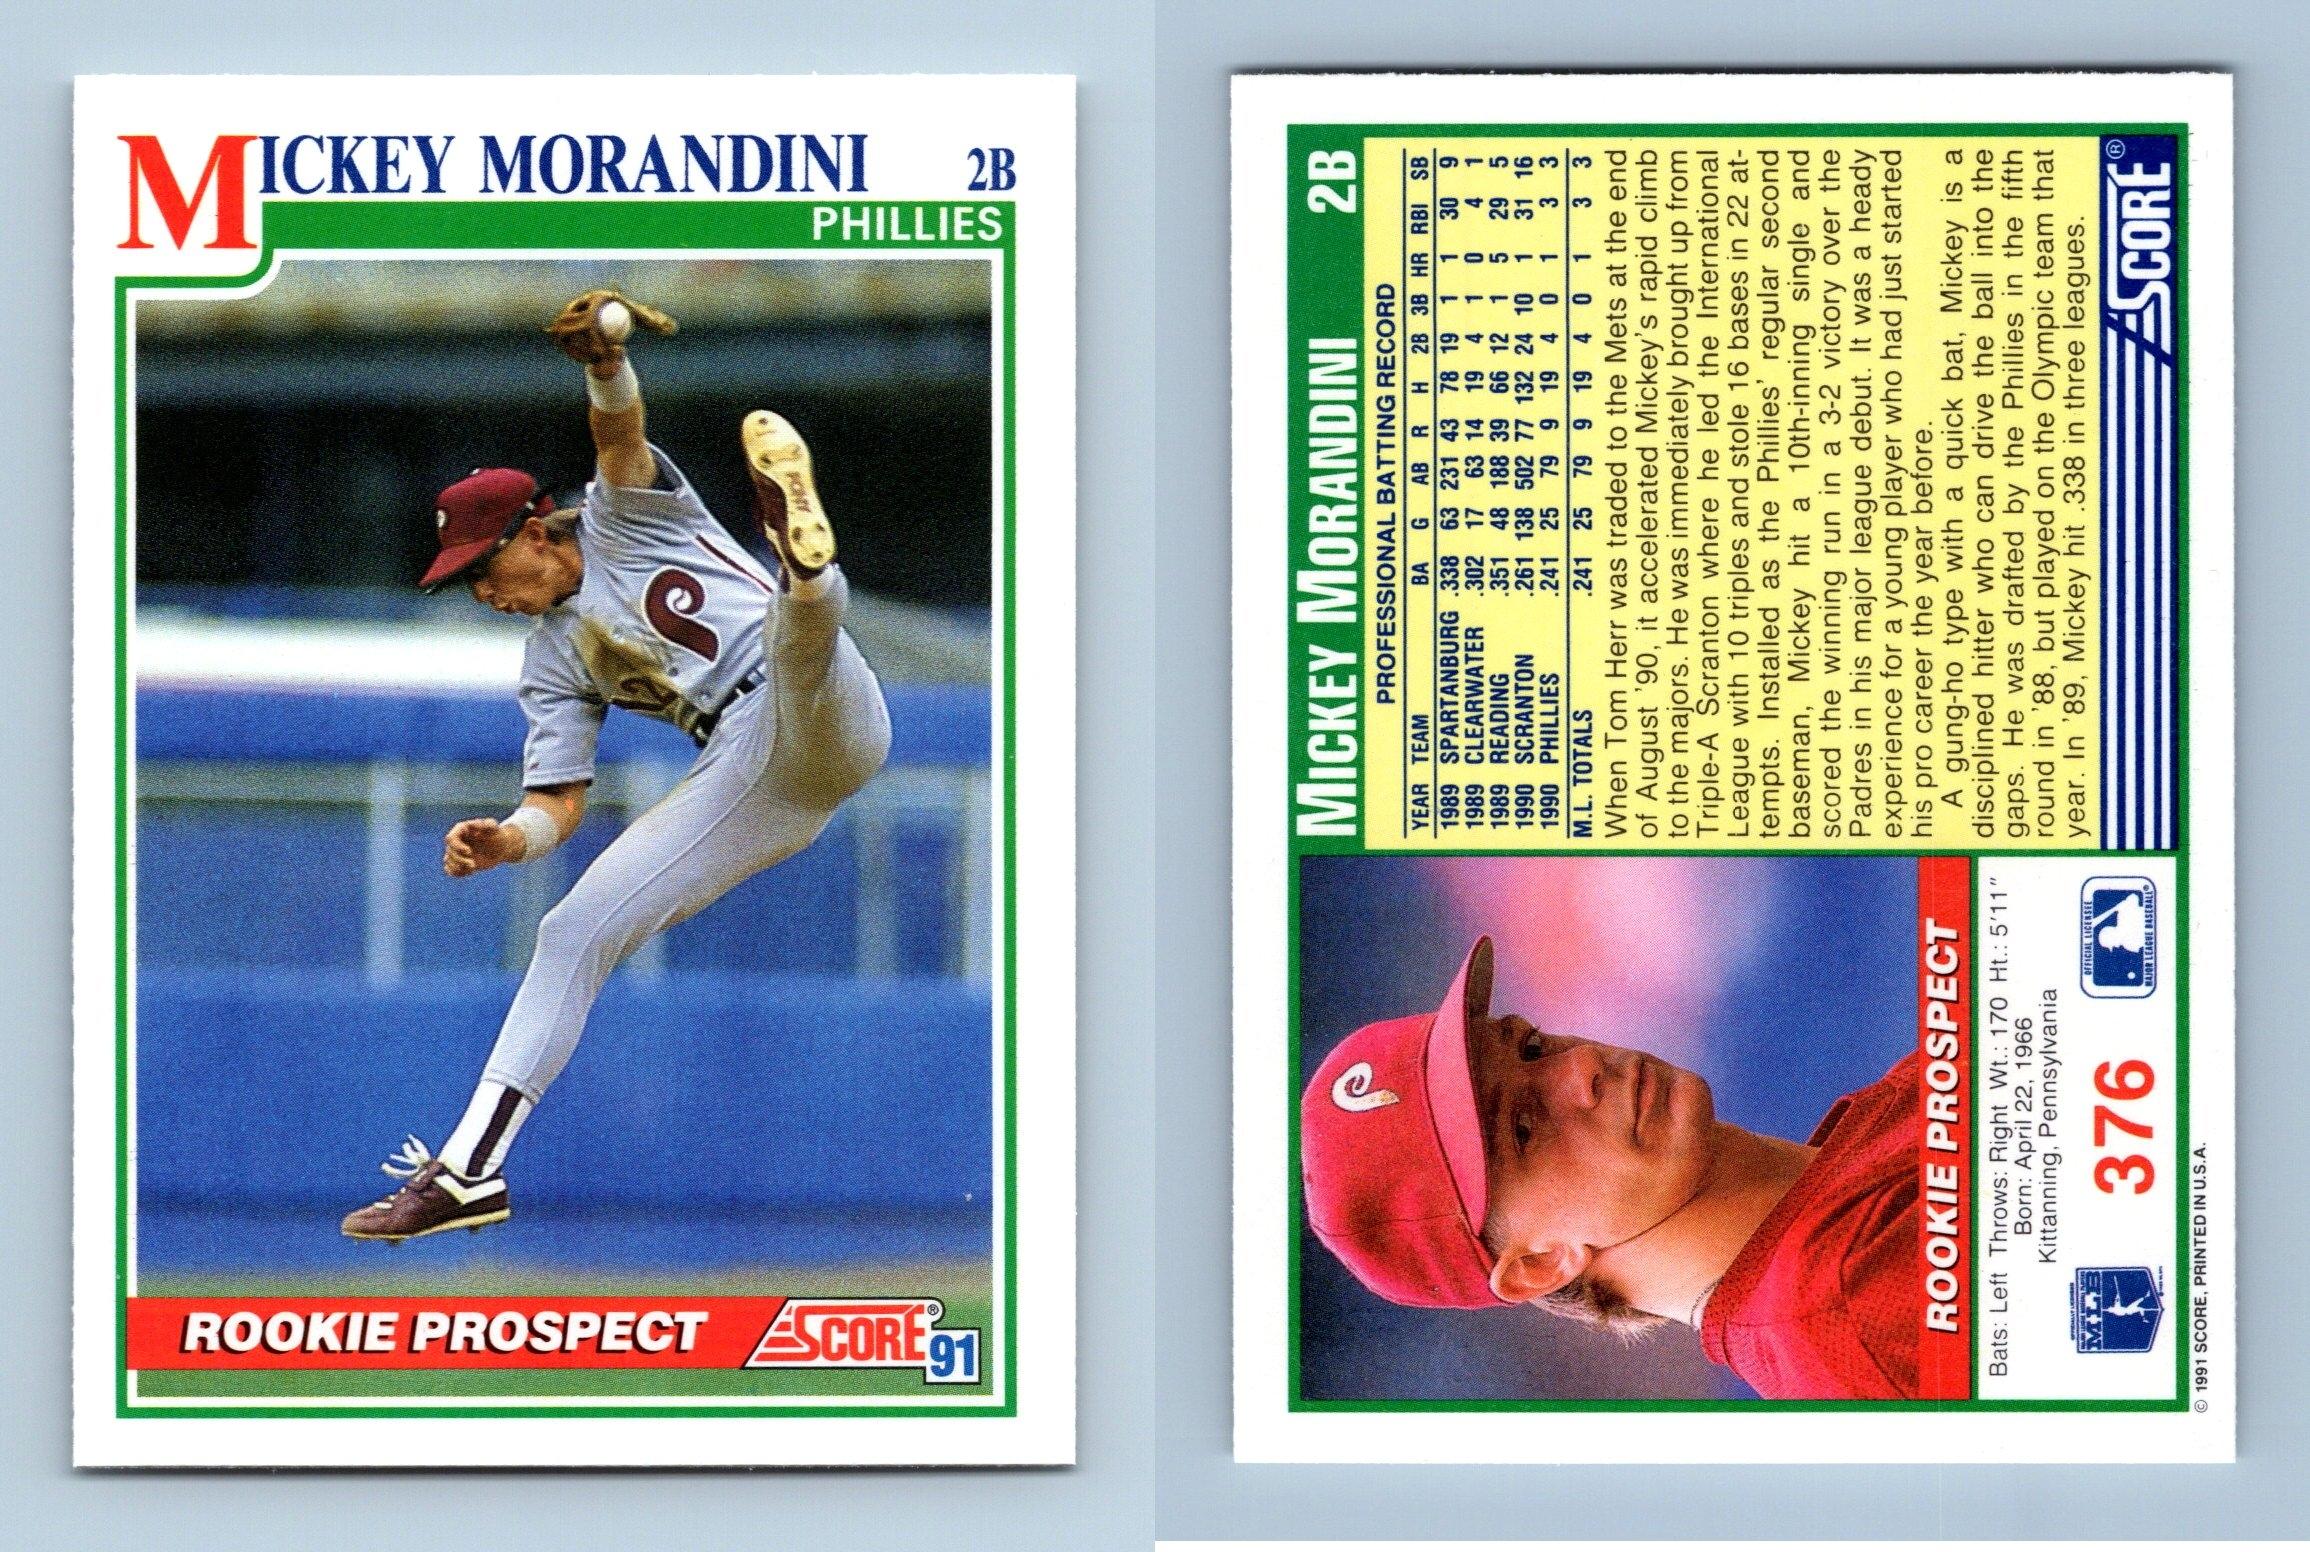 Mickey Morandini - Trading/Sports Card Signed